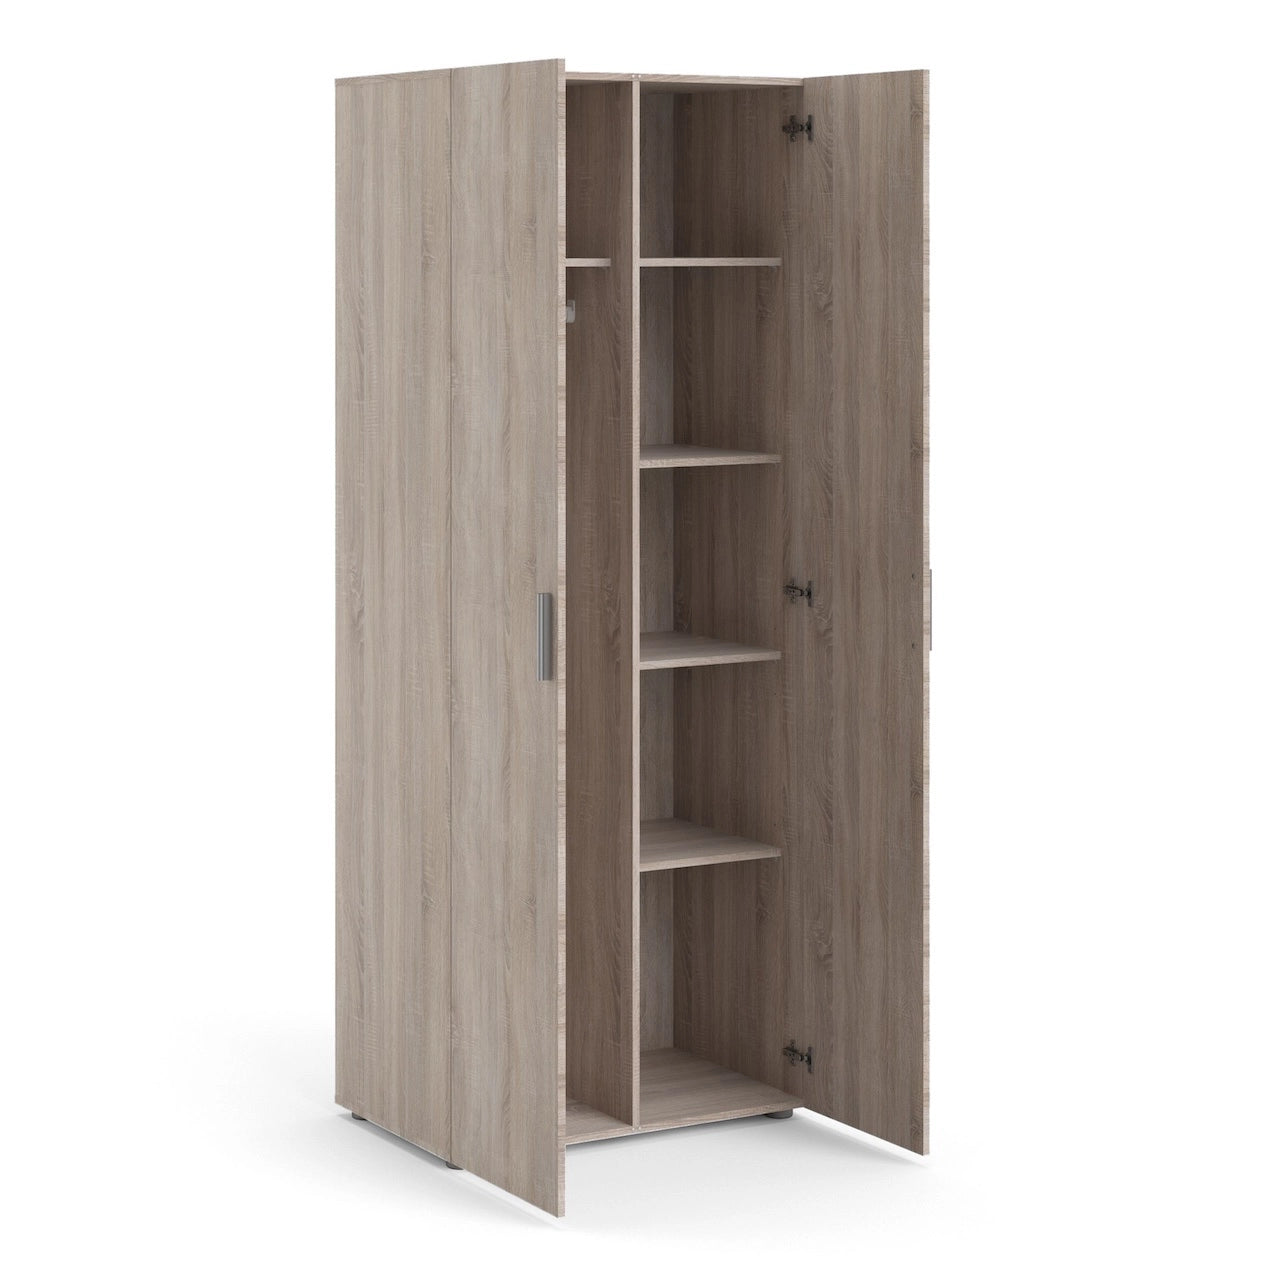 Furniture To Go Pepe Wardrobe with 2 Doors in Truffle Oak